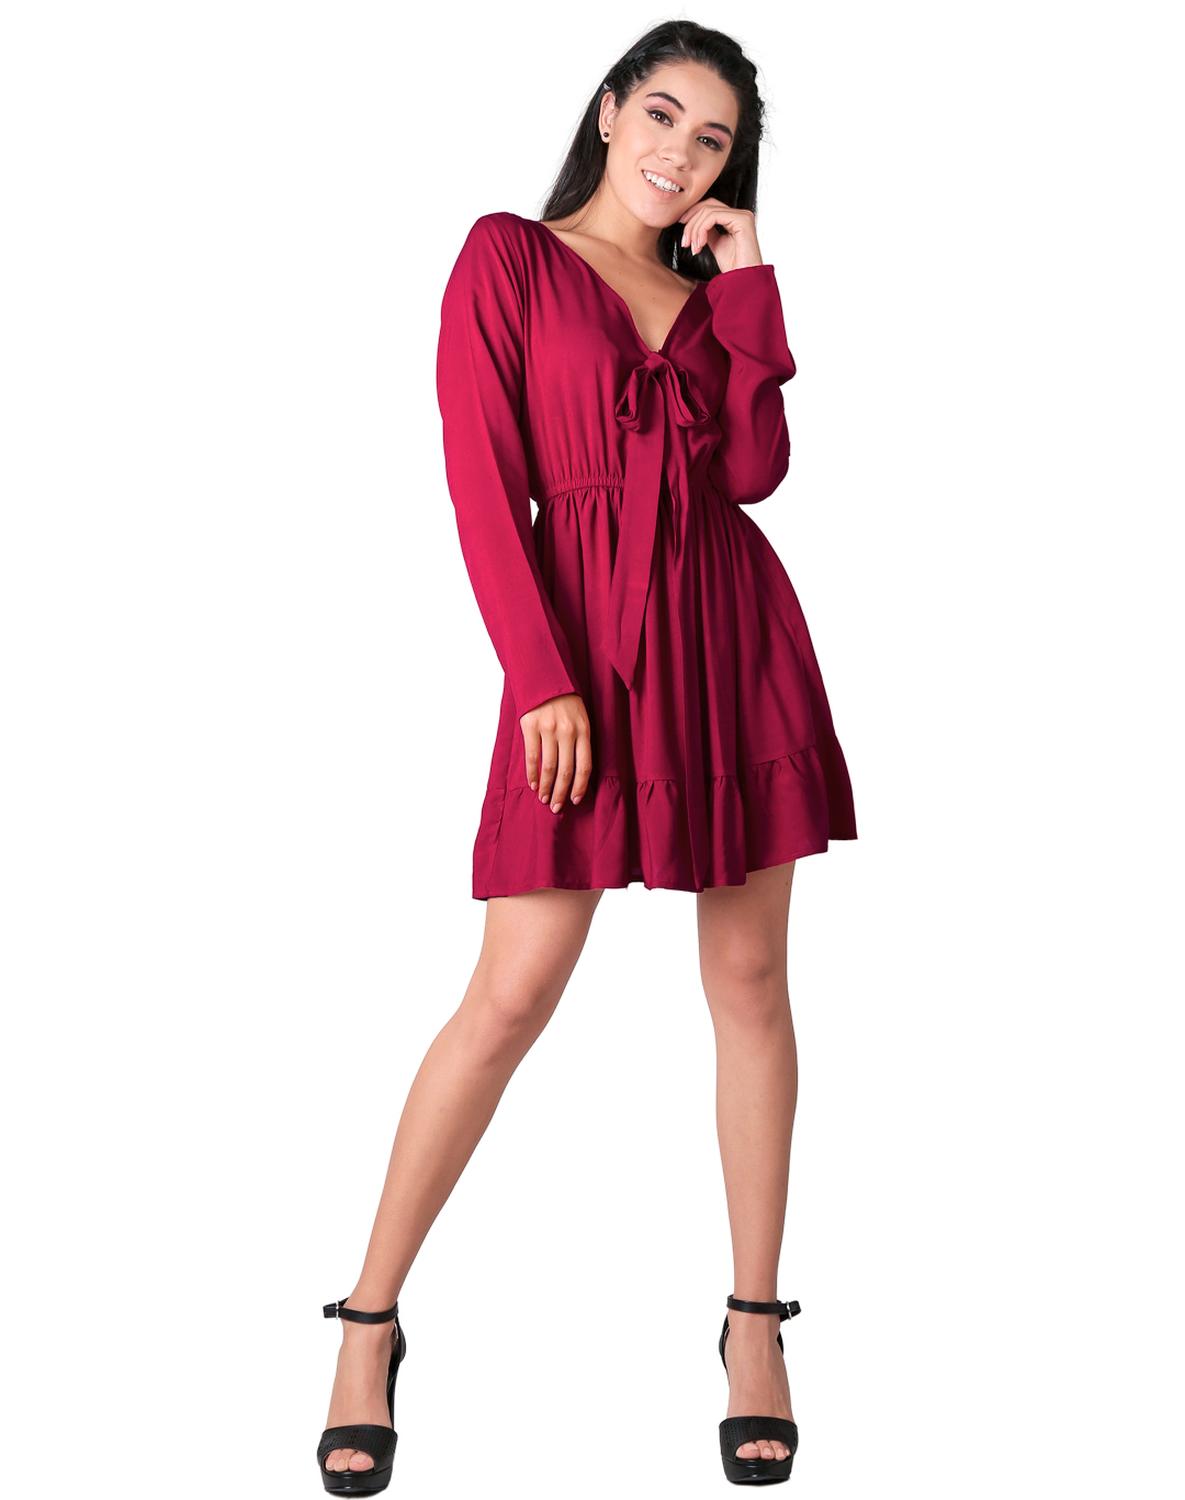 Sweater Mujer Rojo Uk 56704819 – SALVAJE TENTACIÓN